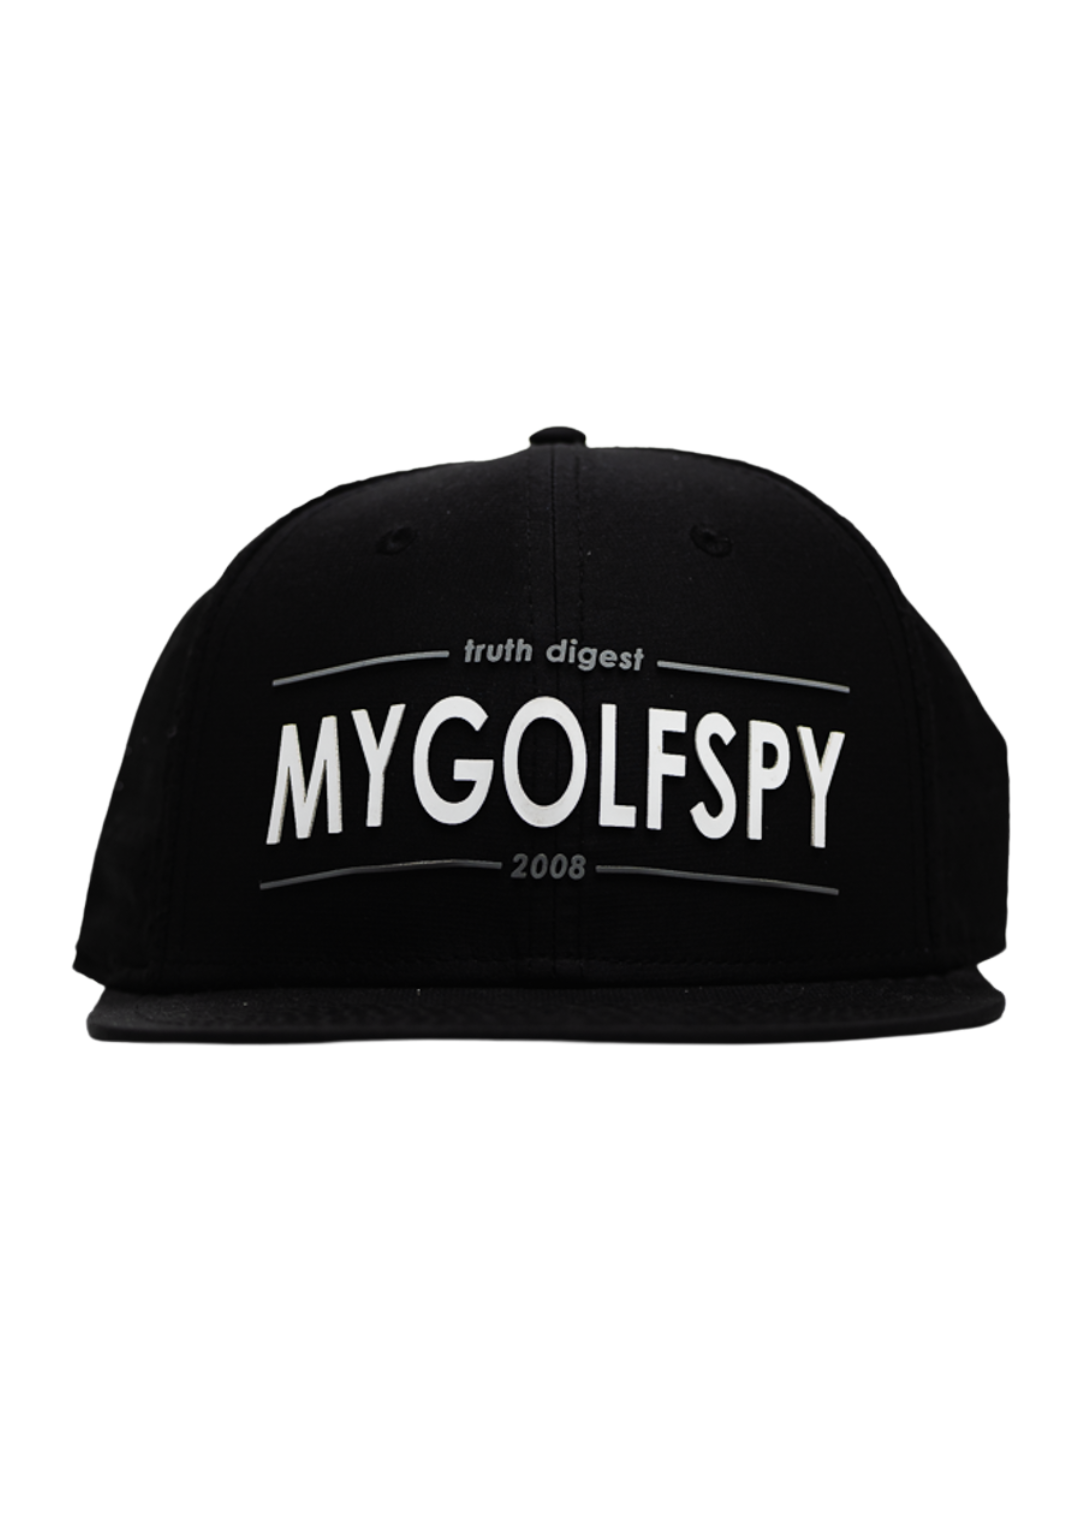 MyGolfSpy "Truth Digest" Hat | LIMITED